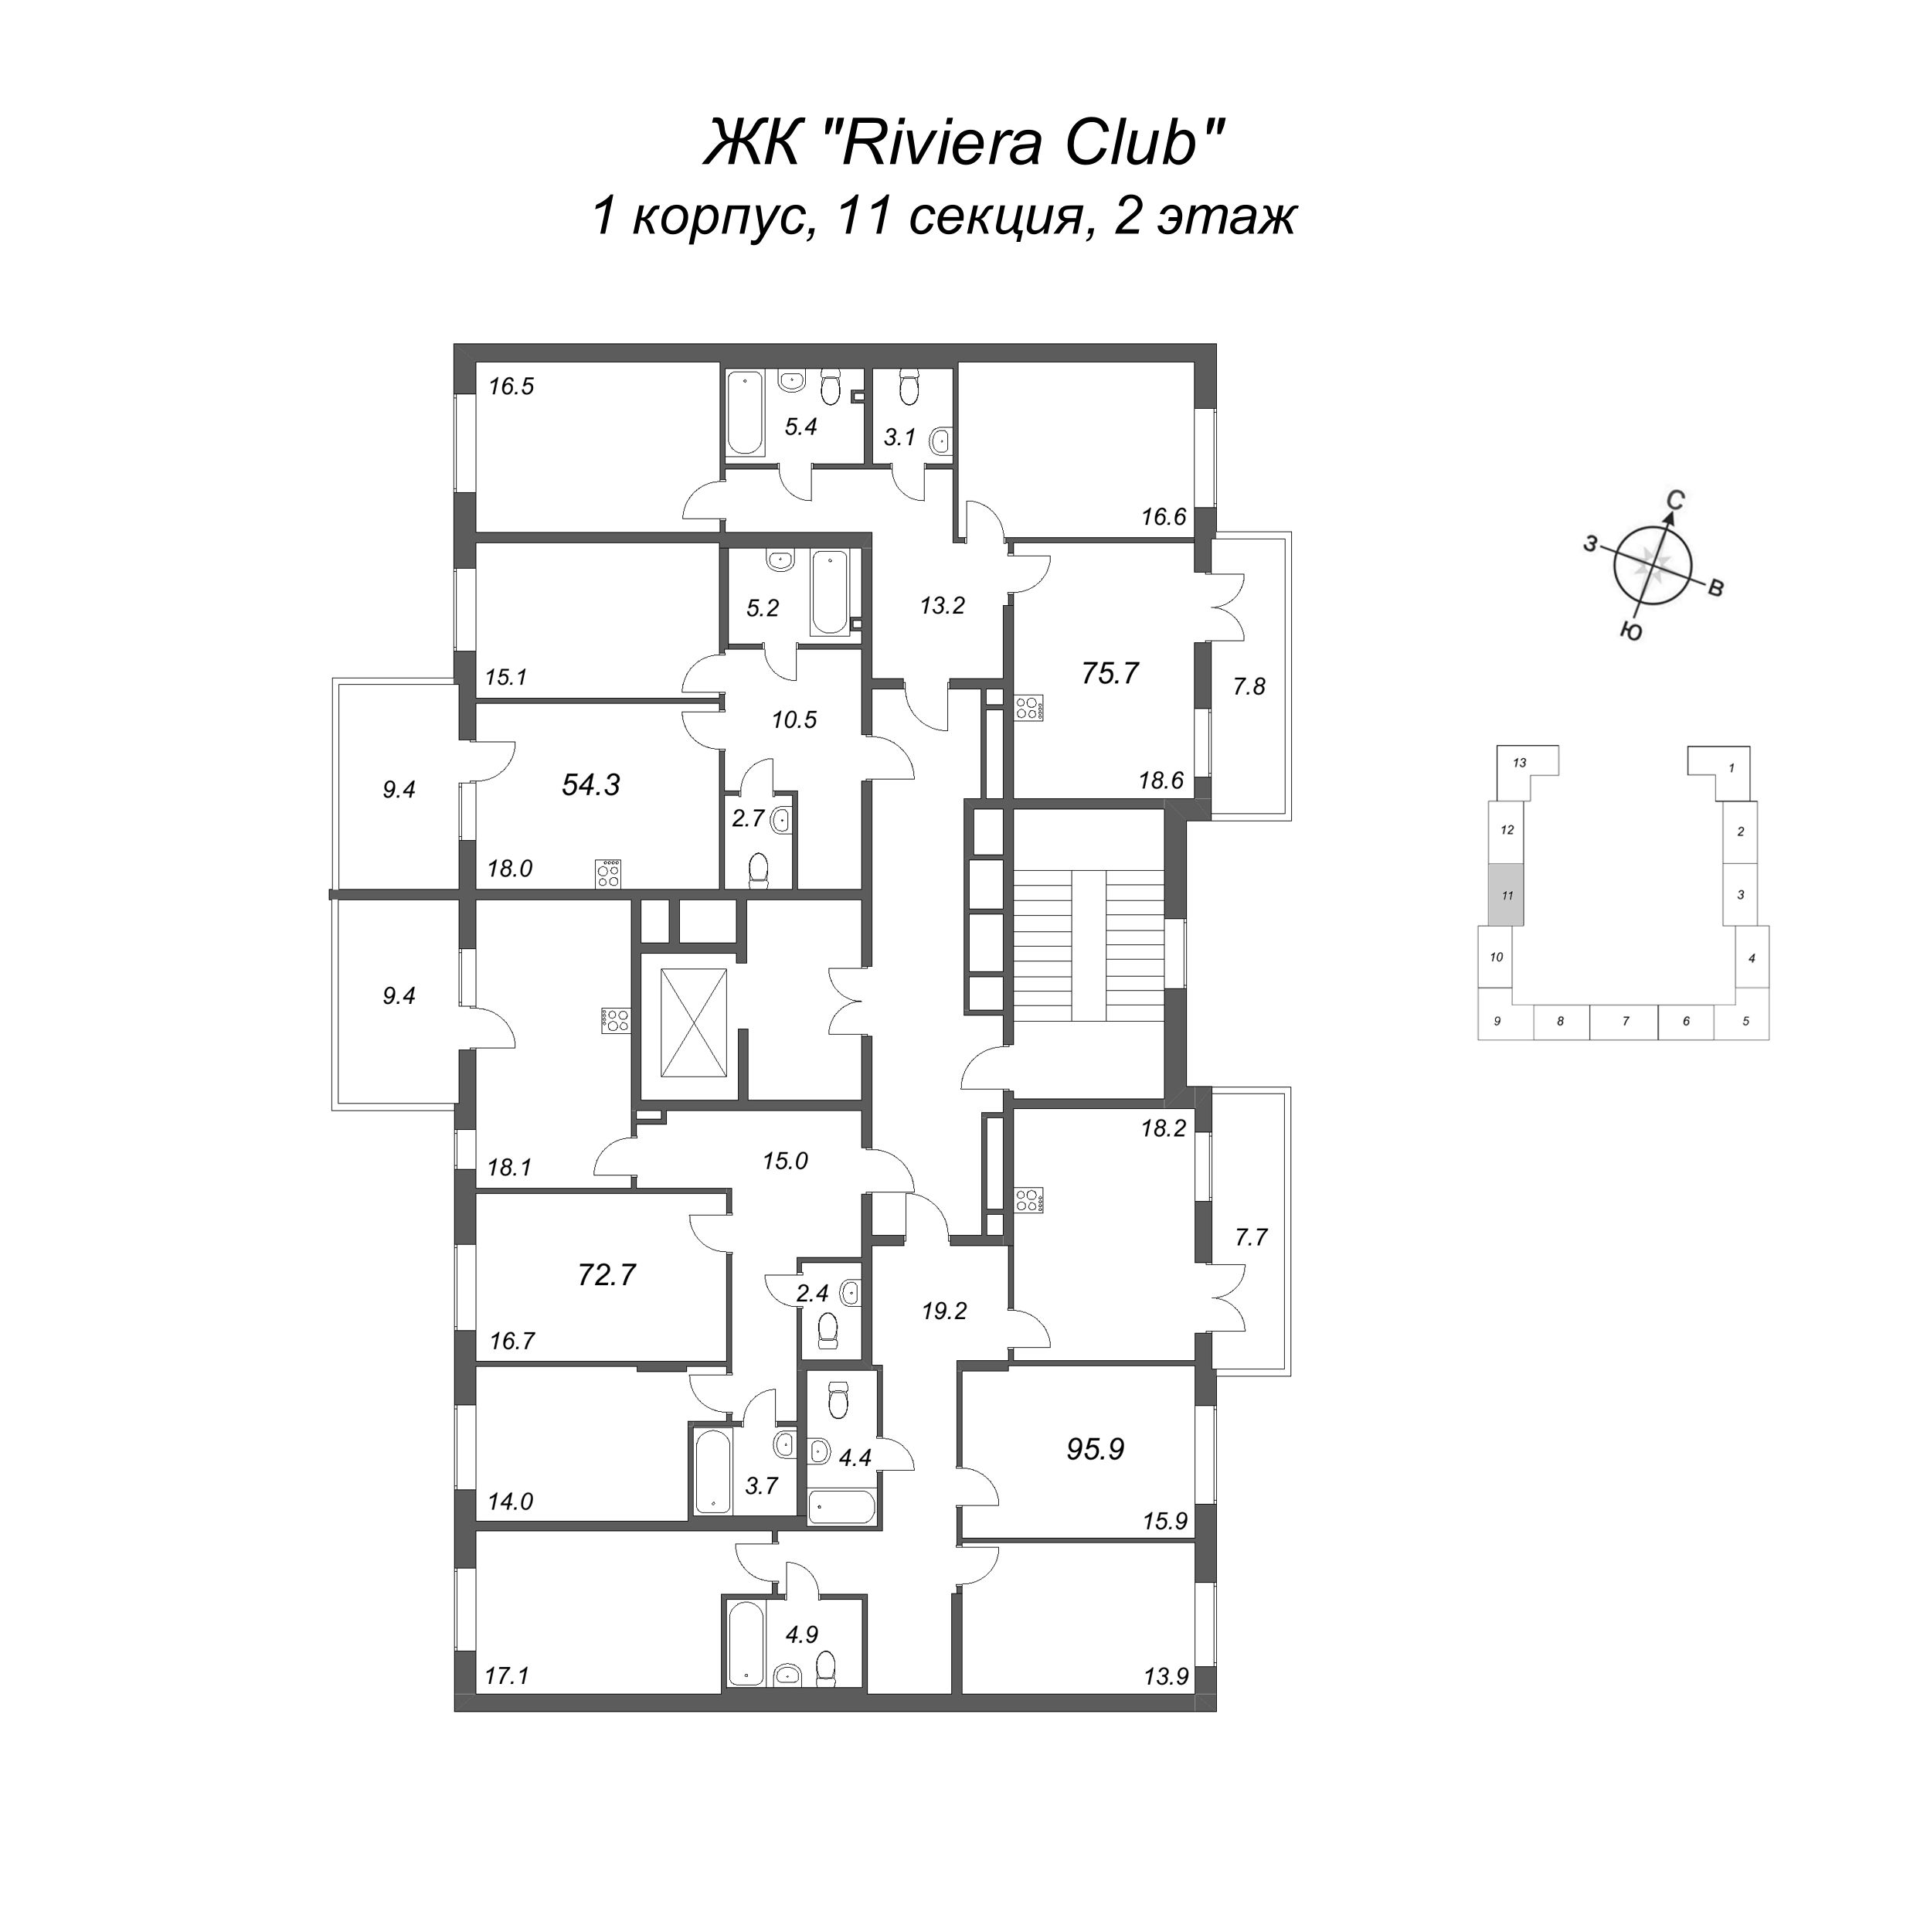 3-комнатная (Евро) квартира, 72.7 м² в ЖК "Riviera Club" - планировка этажа